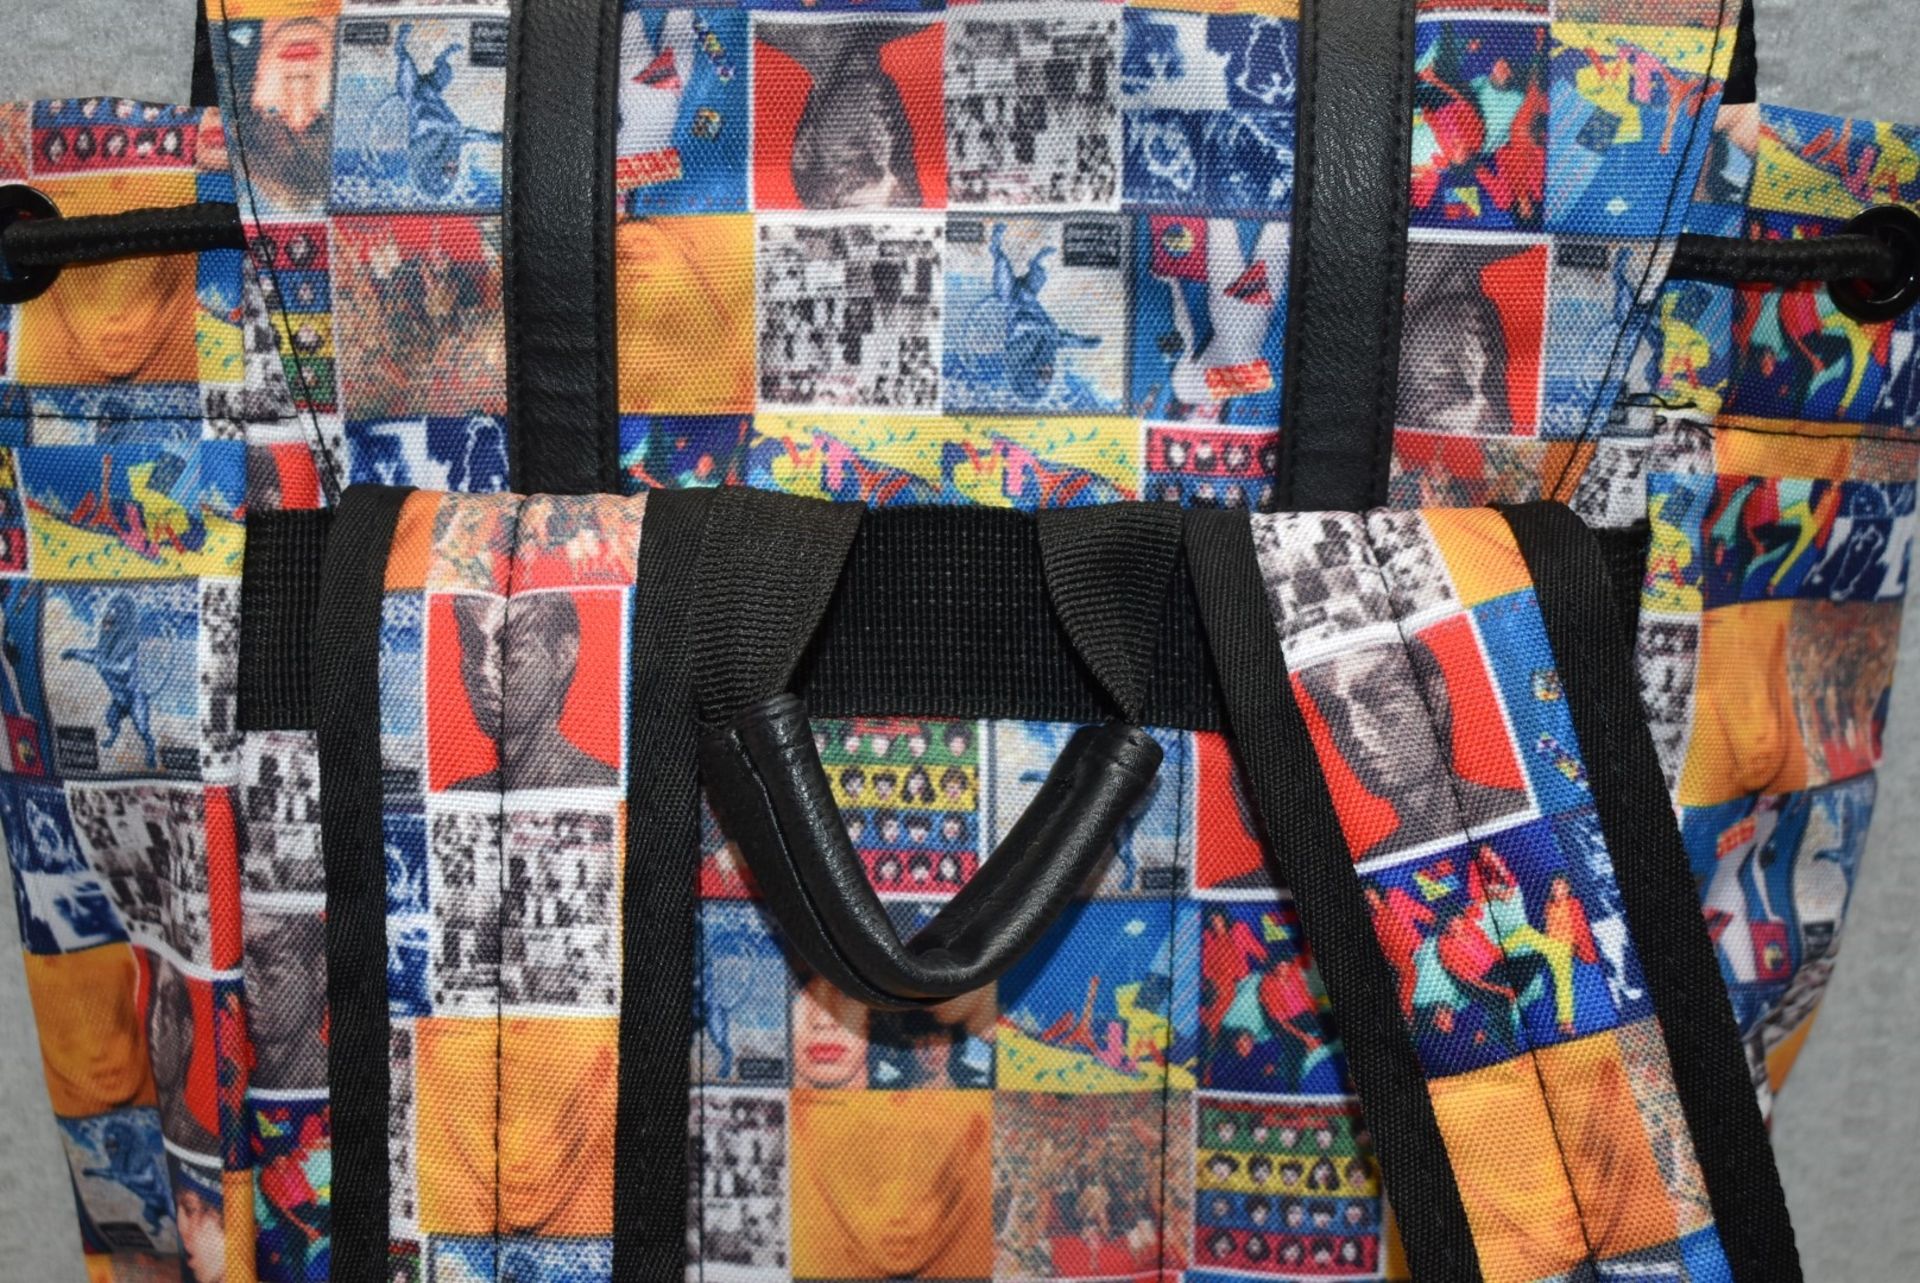 1 x Rolling Stones Vintage Style Heritage Backpack Bag By Rocksax - New & Unused - RRP £50 - Image 5 of 8